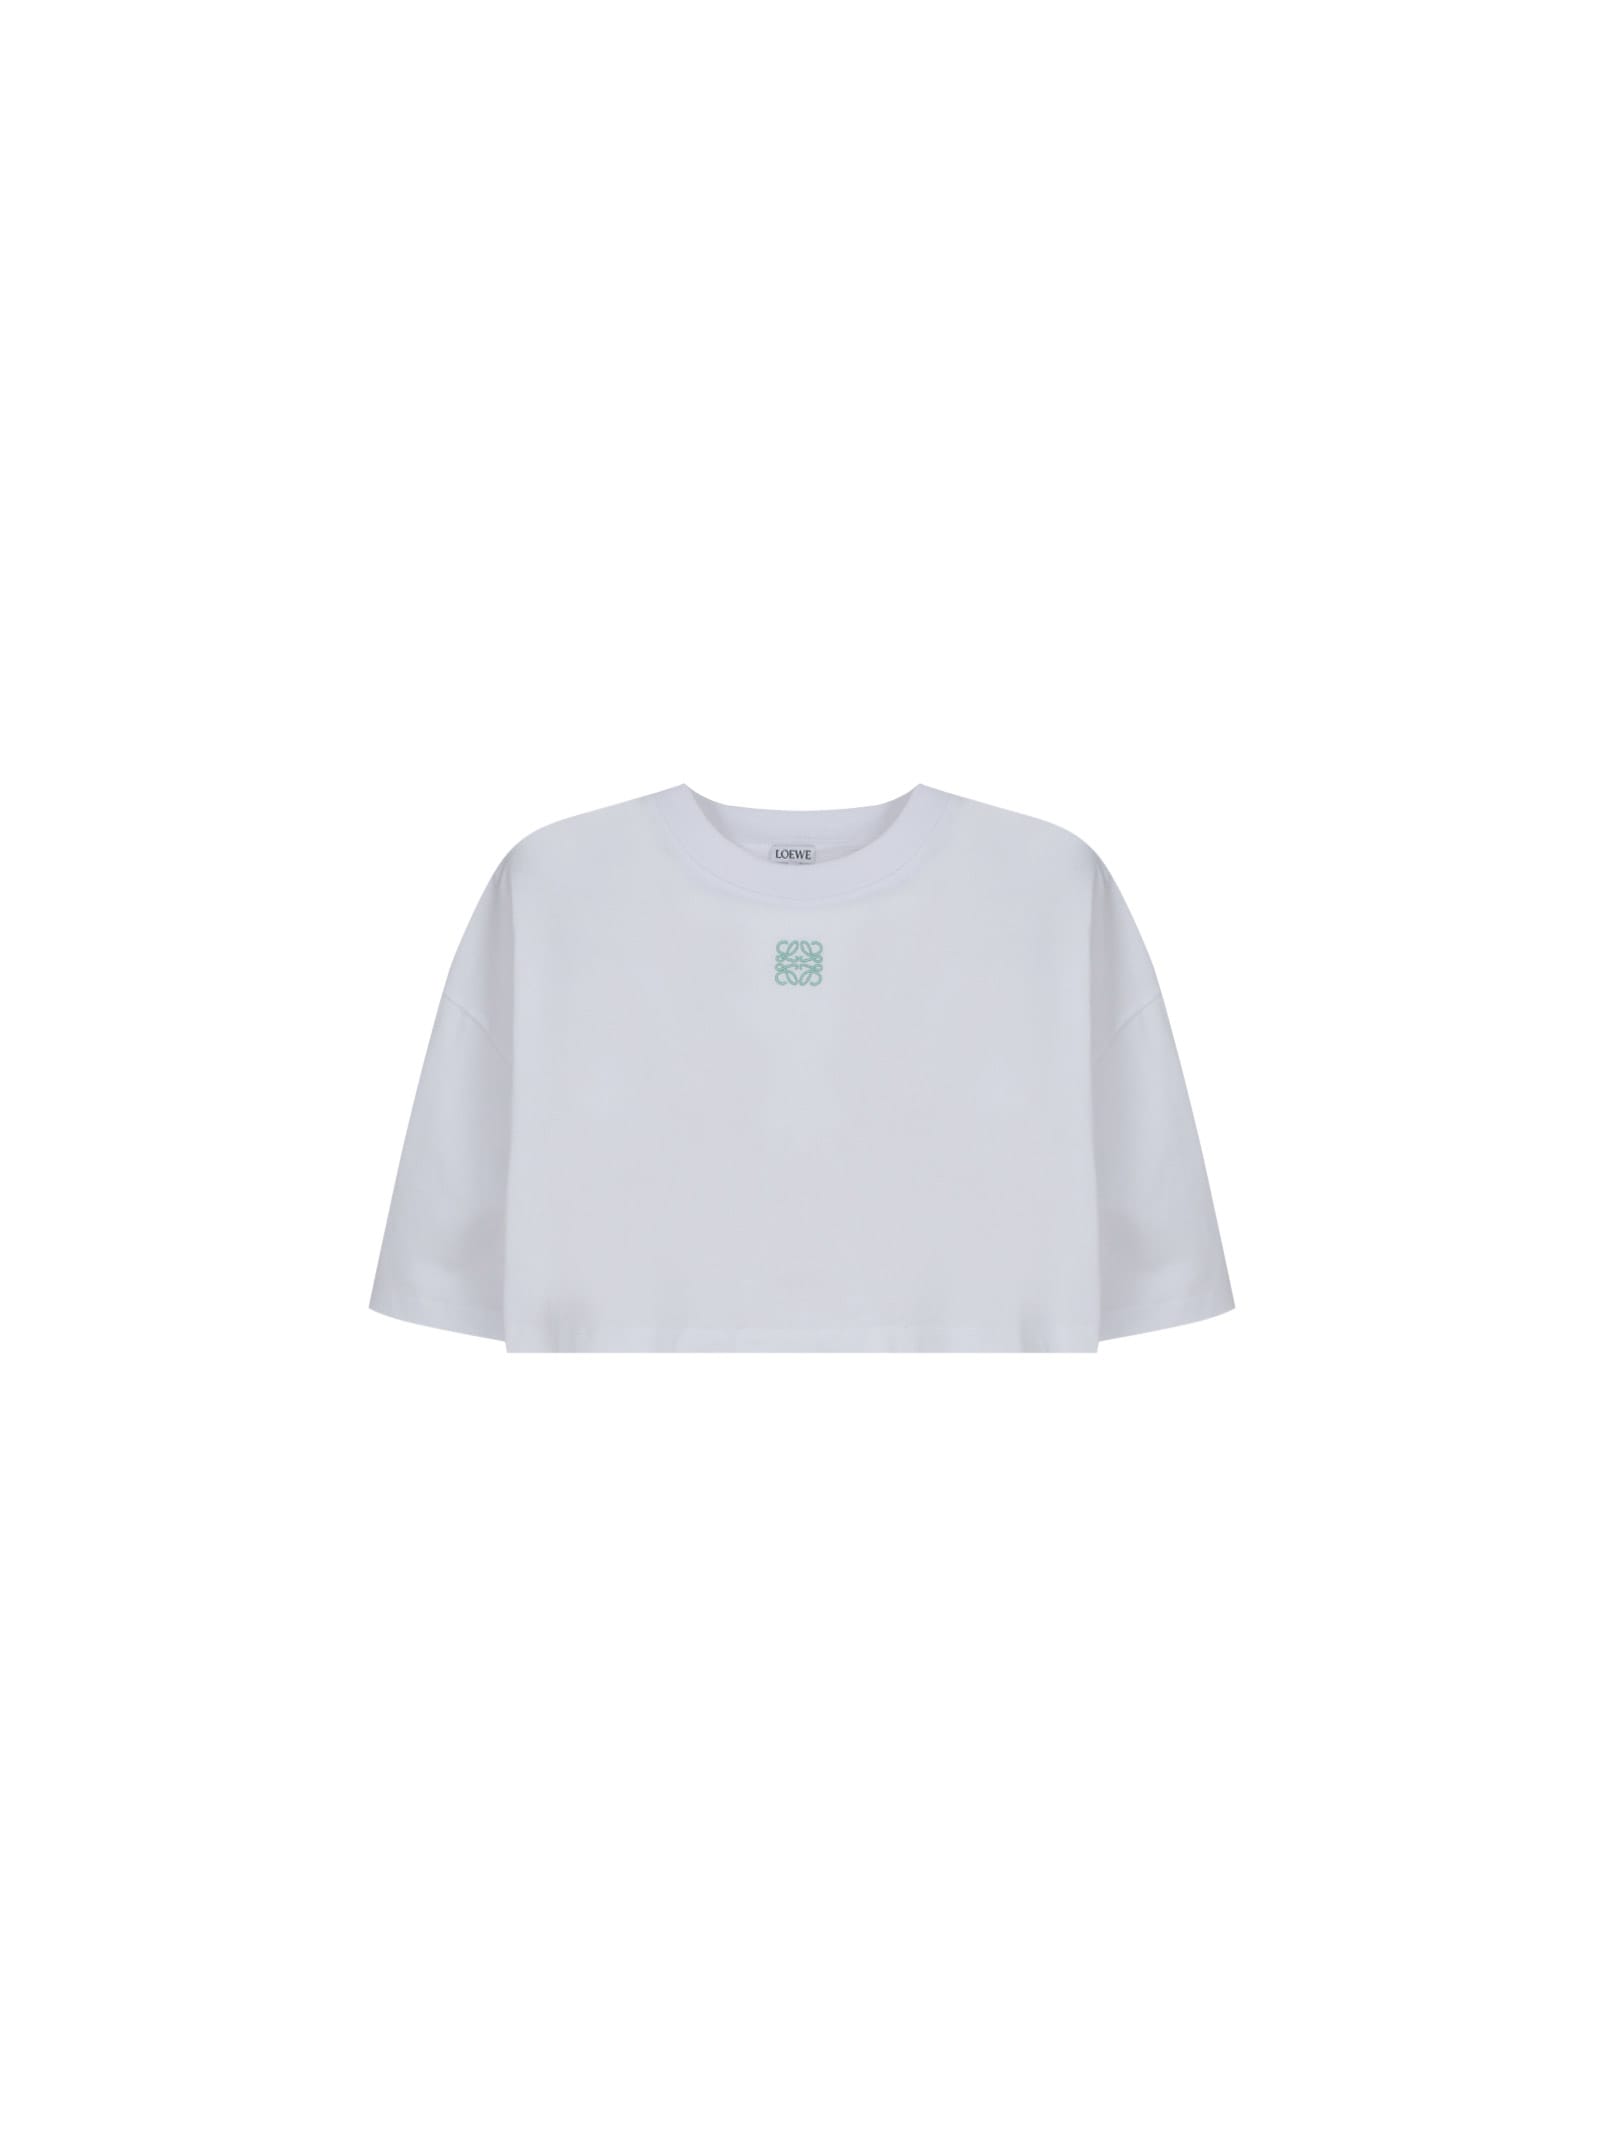 Loewe Anagram T-shirt | italist, ALWAYS LIKE A SALE